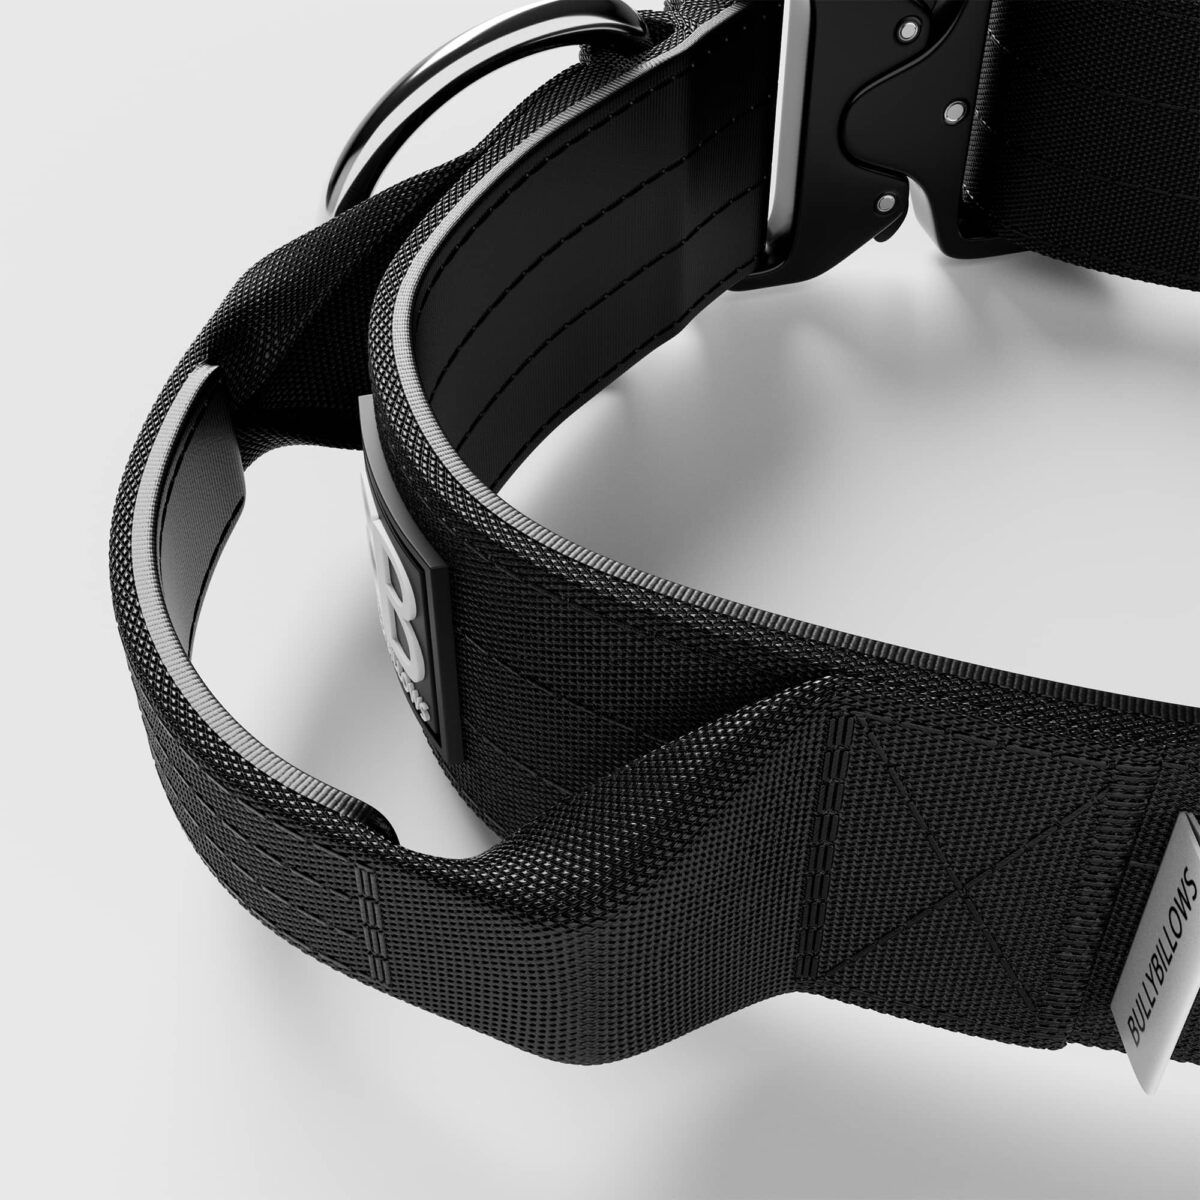 BULLYBILLOWS 5cm Combat Dog Collar - Black v2.0